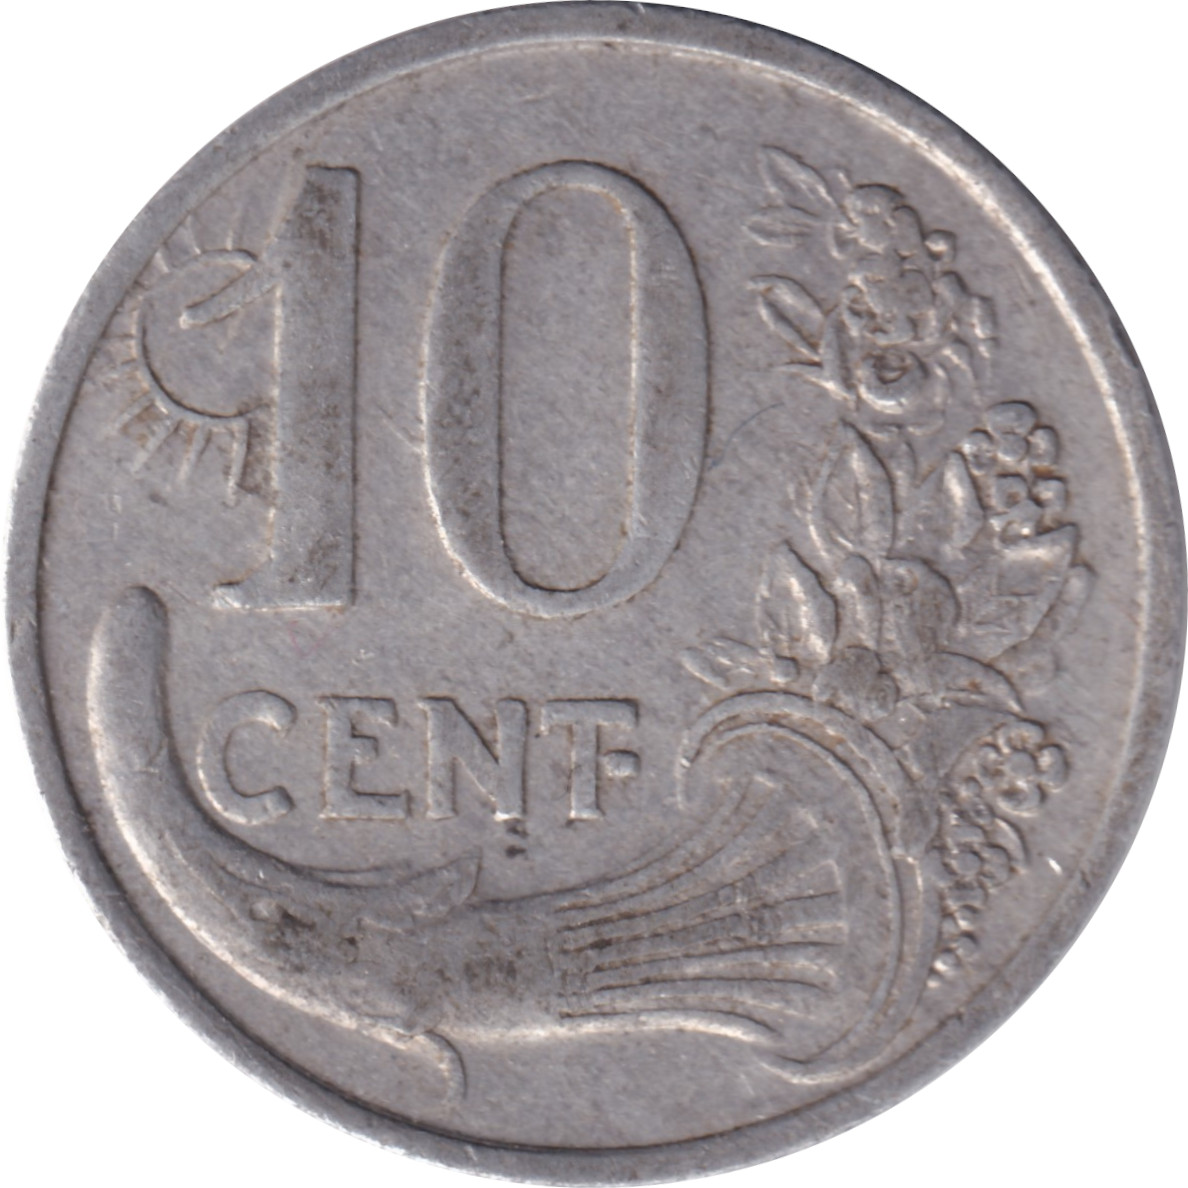 10 centimes - Alpes Maritimes